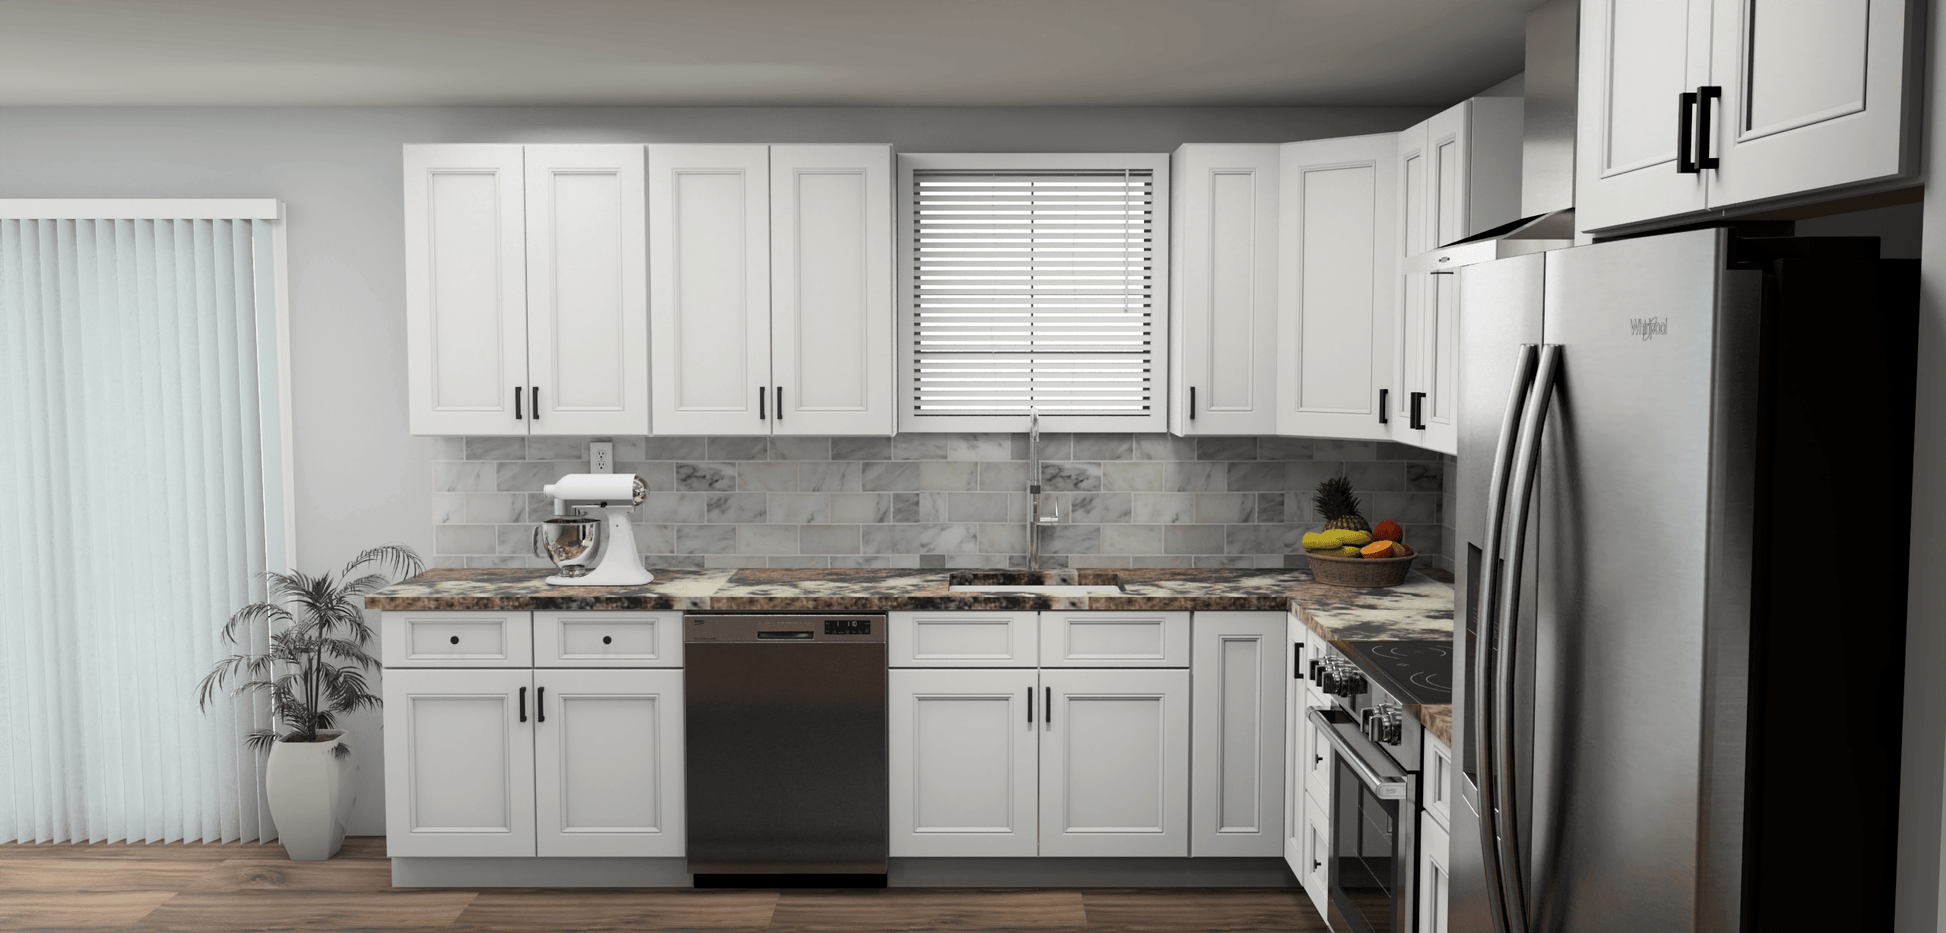 Fabuwood Allure Nexus Frost 11 x 13 L Shaped Kitchen Side Layout Photo